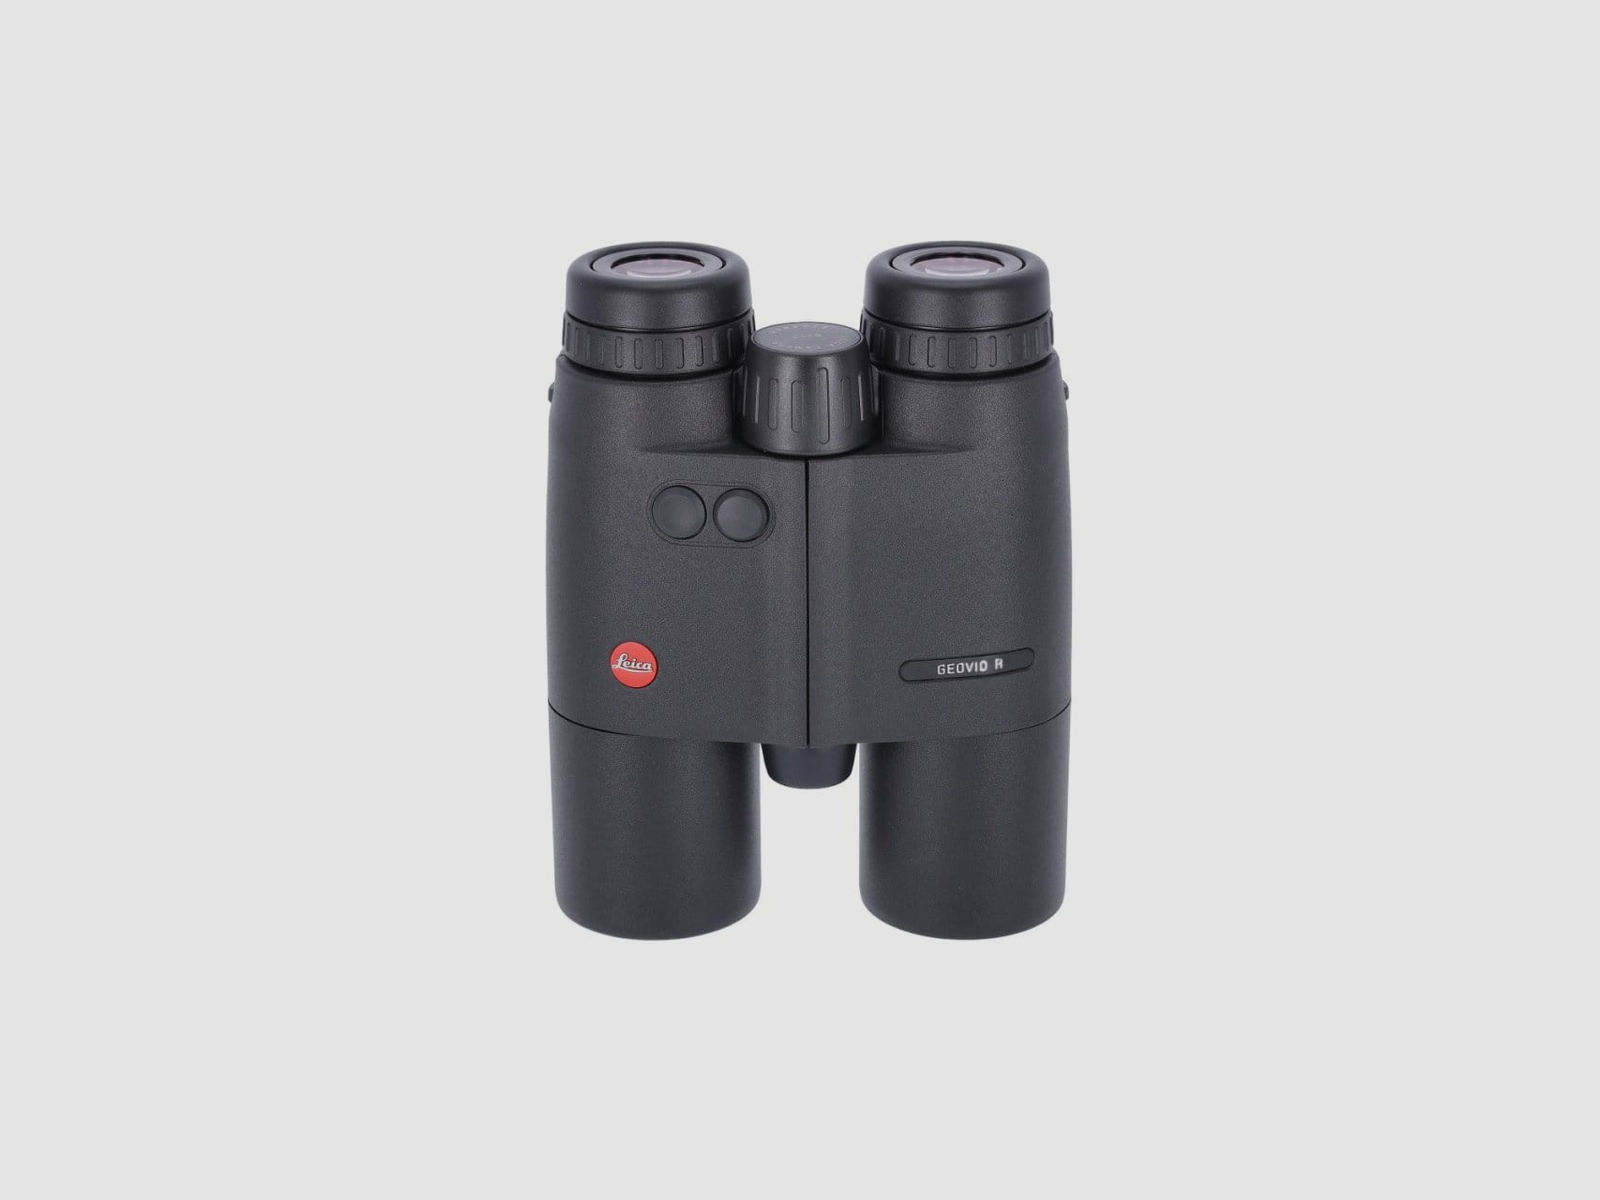 Leica Geovid R 8x42 Fernglas mit Entfernungsmesser